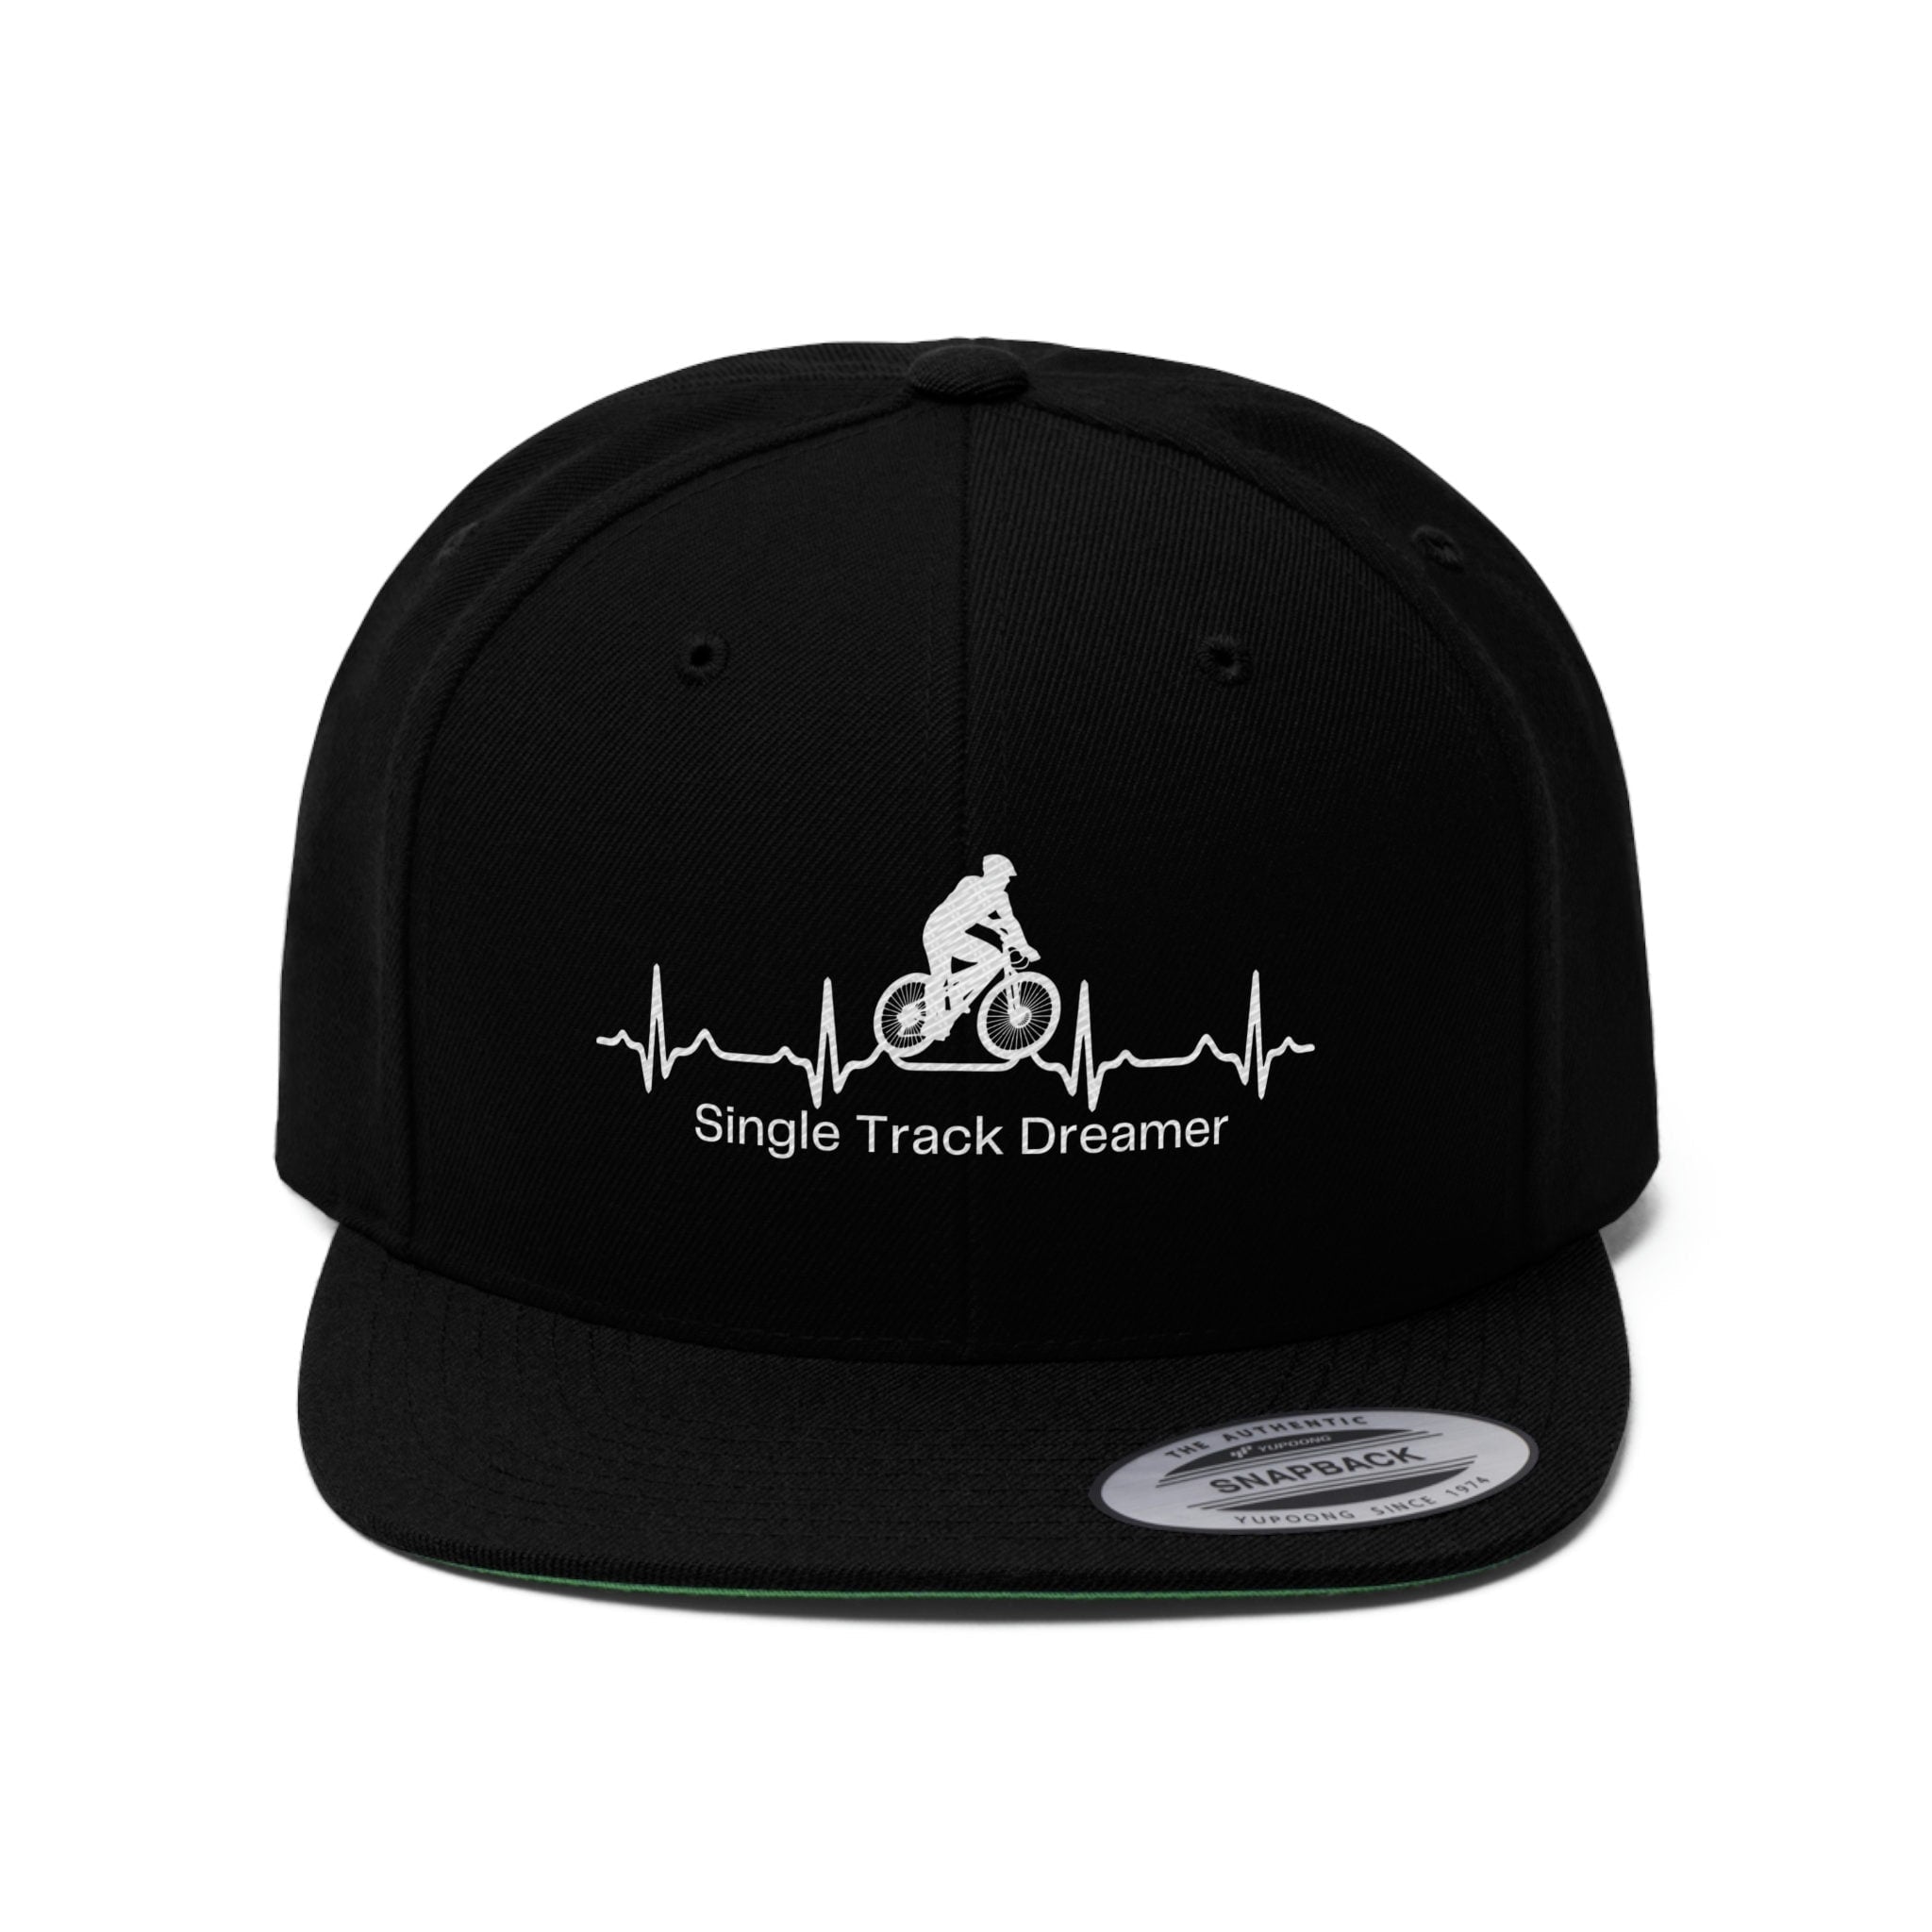 SNAPBACK CAP | SINGLE TRACK DREAMER HEARTBEAT | BLACK | ONE SIZE FITS ALL - Single Track Dreamer